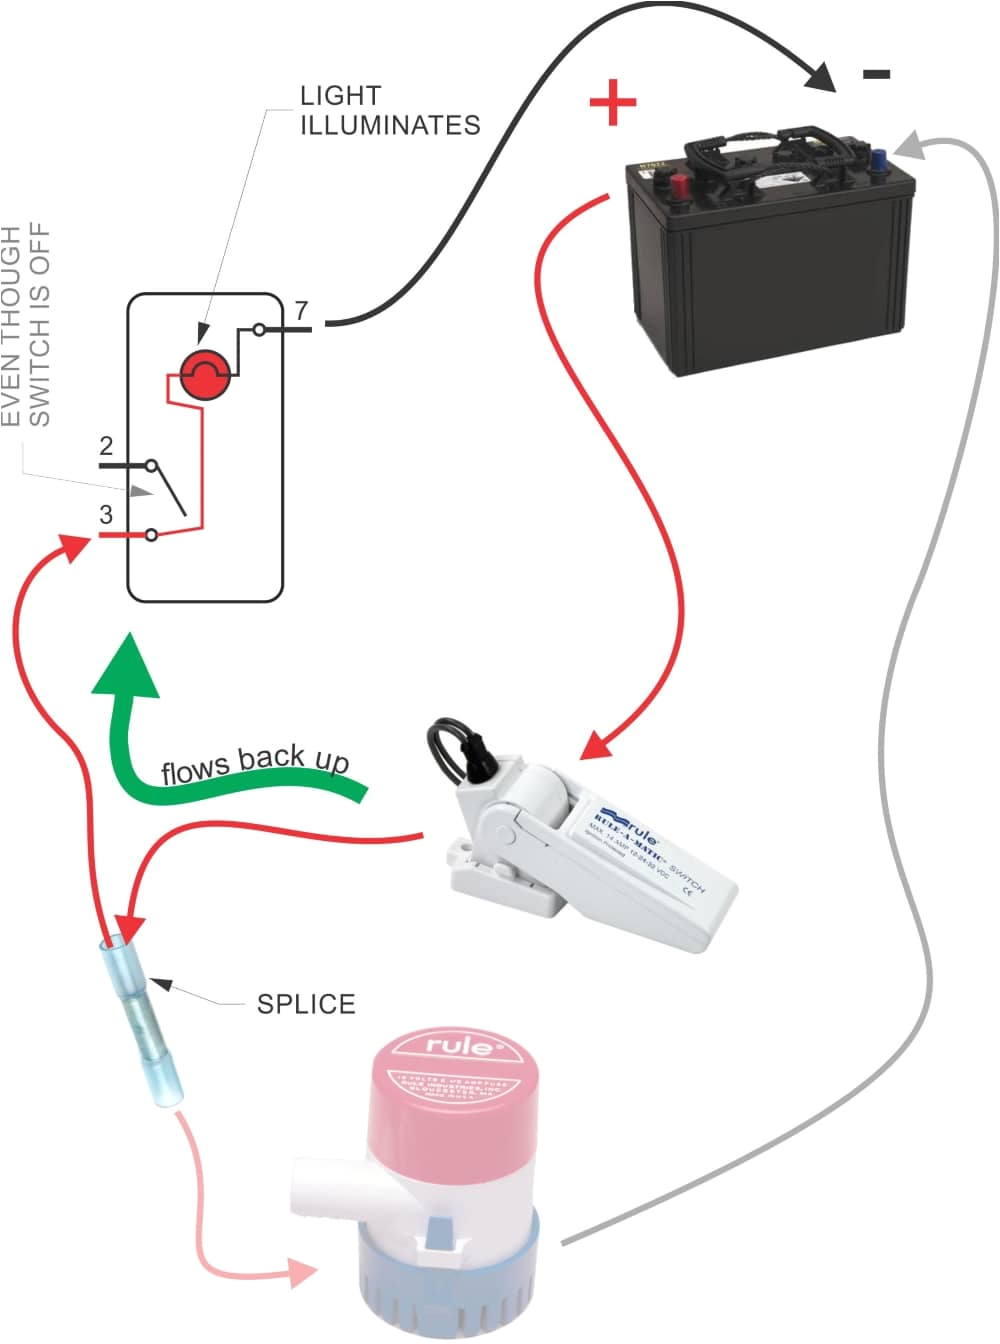 lovett bilge pump wiring diagram wiring diagrams konsult lovett bilge pump wiring diagram